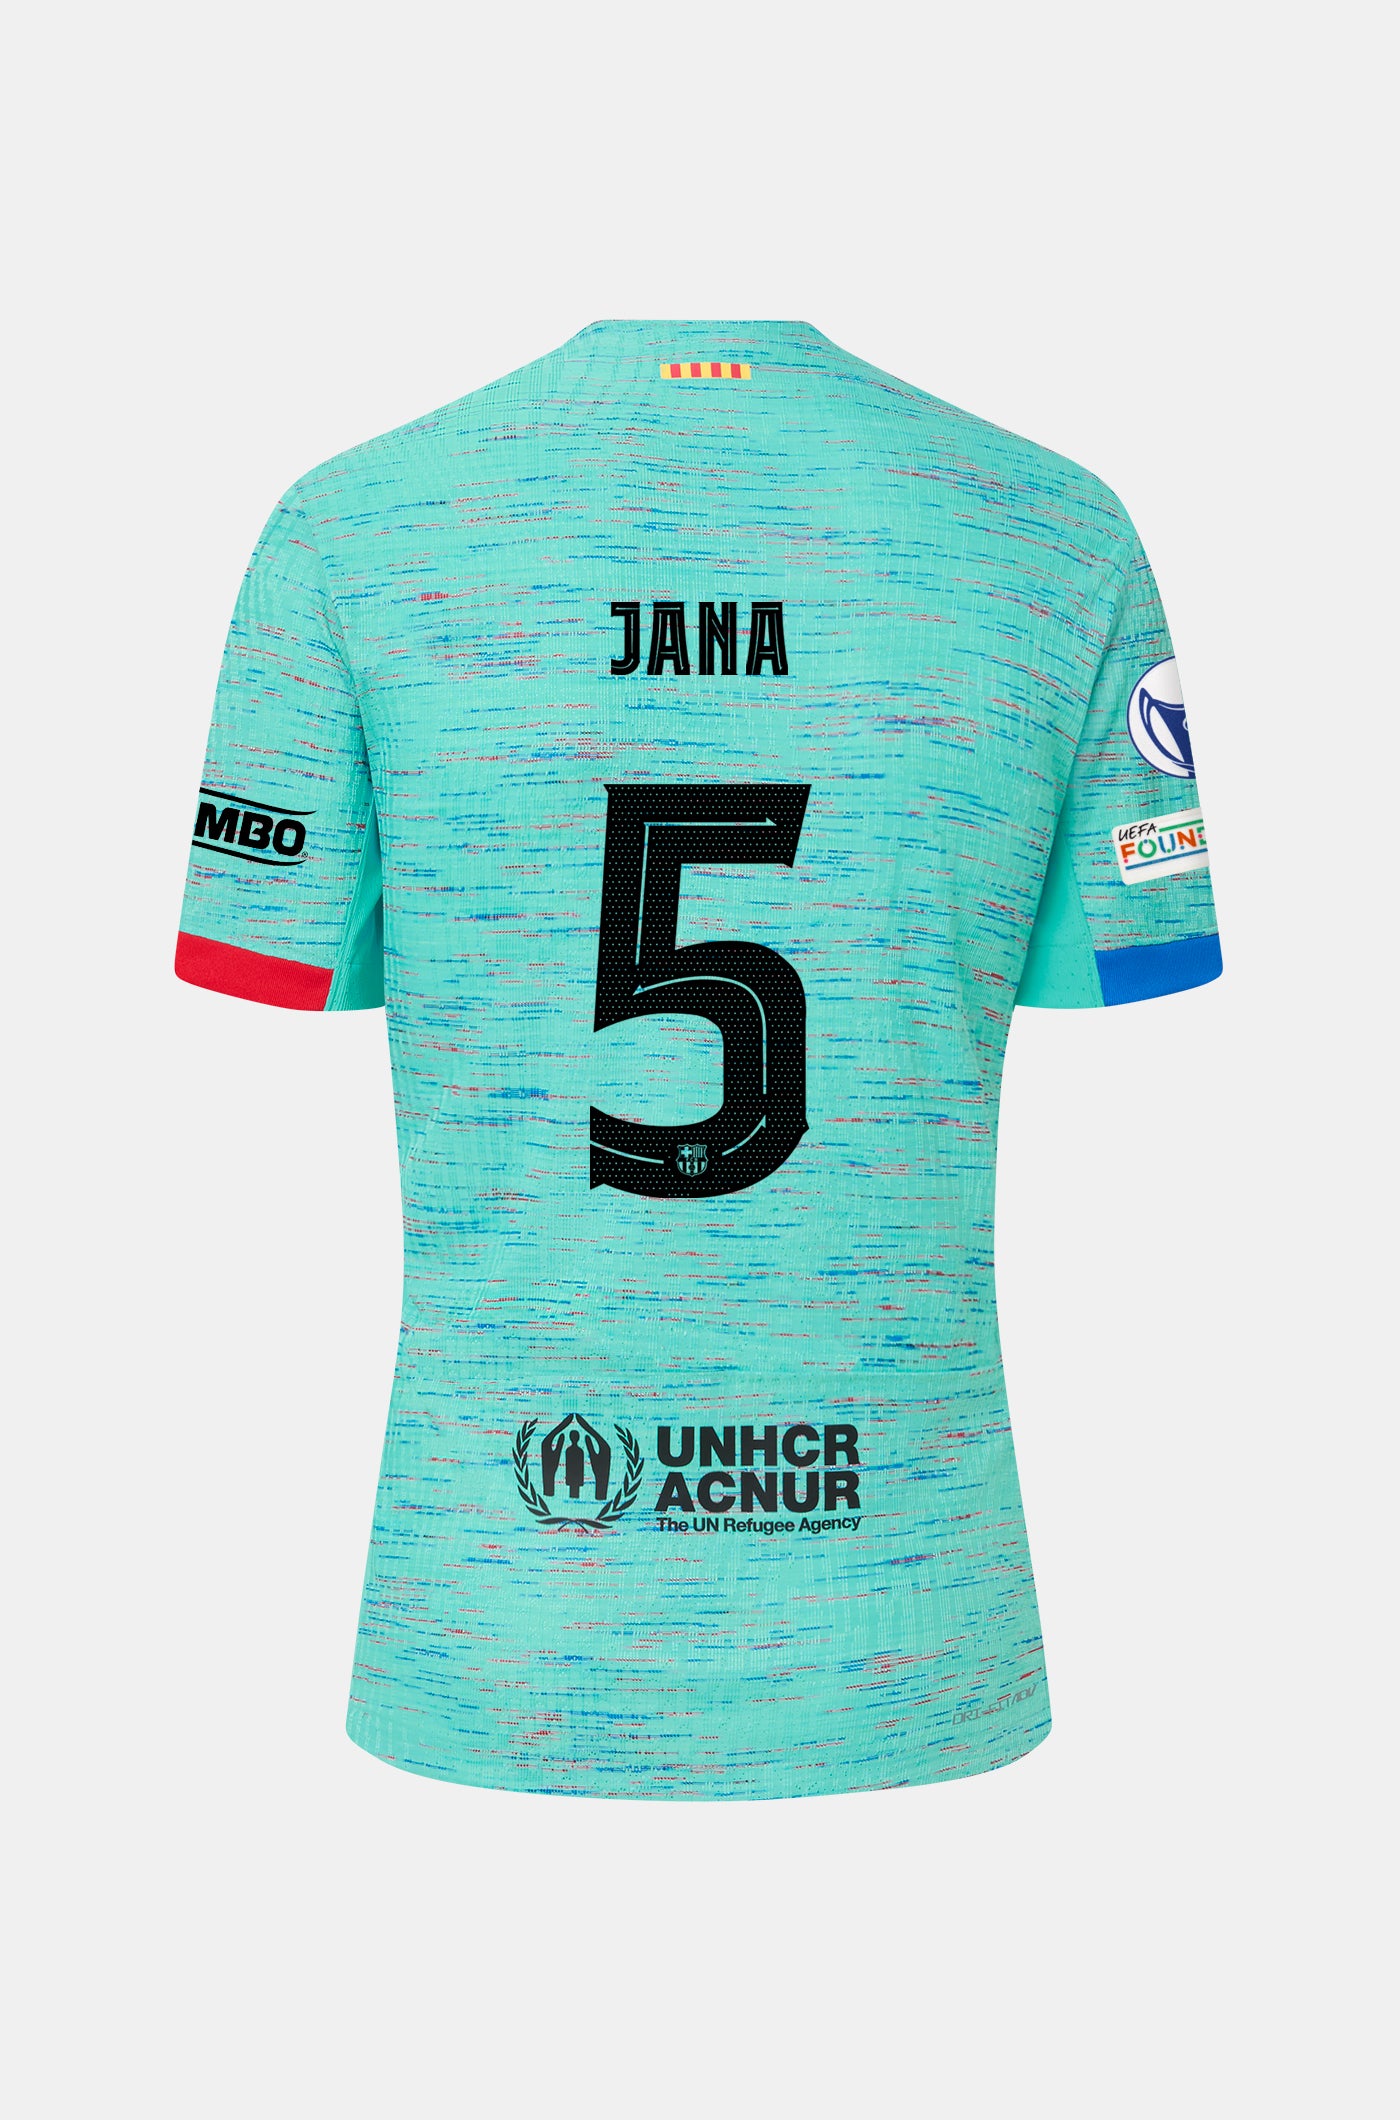 UWCL FC Barcelona third shirt 23/24 - Women  - JANA